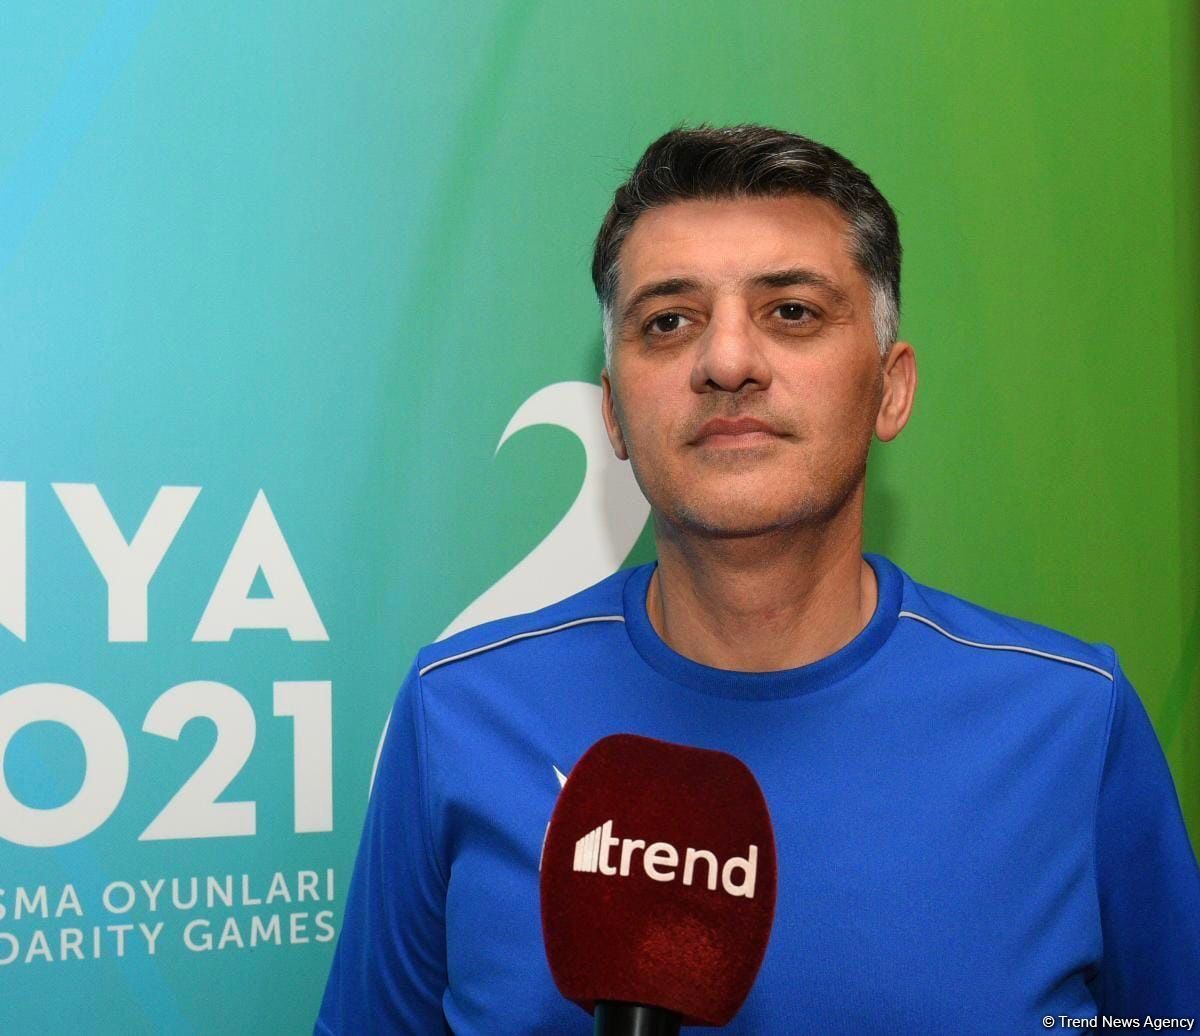 Azerbaijan establishes itself as sports country - official [PHOTO]